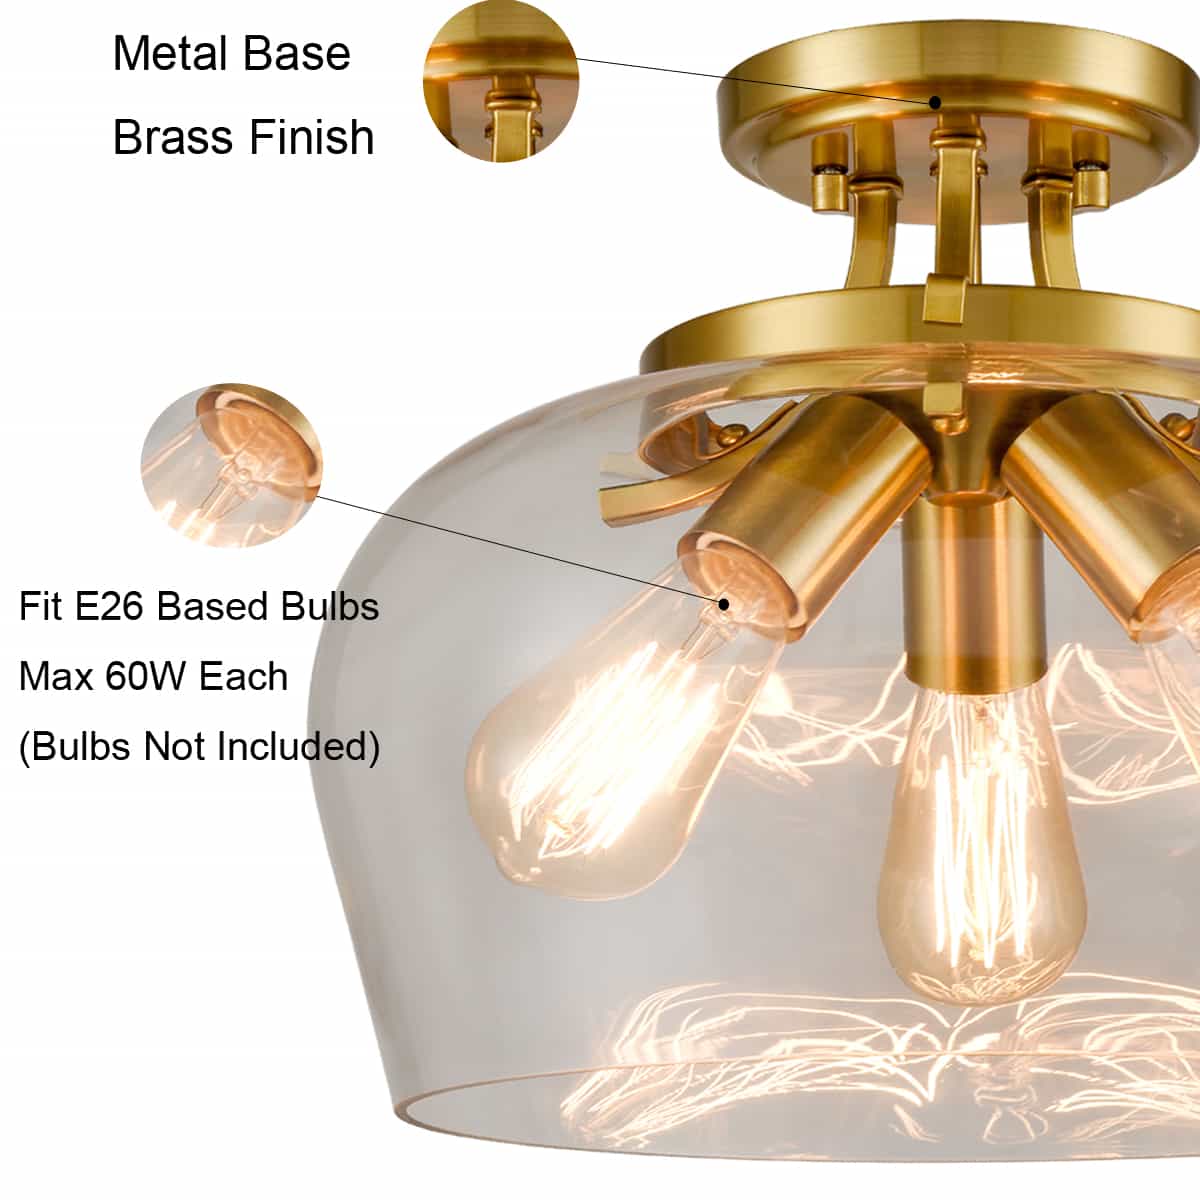 Brass 3-Light Ceiling Light Semi Flush Mount Clear Glass Shade